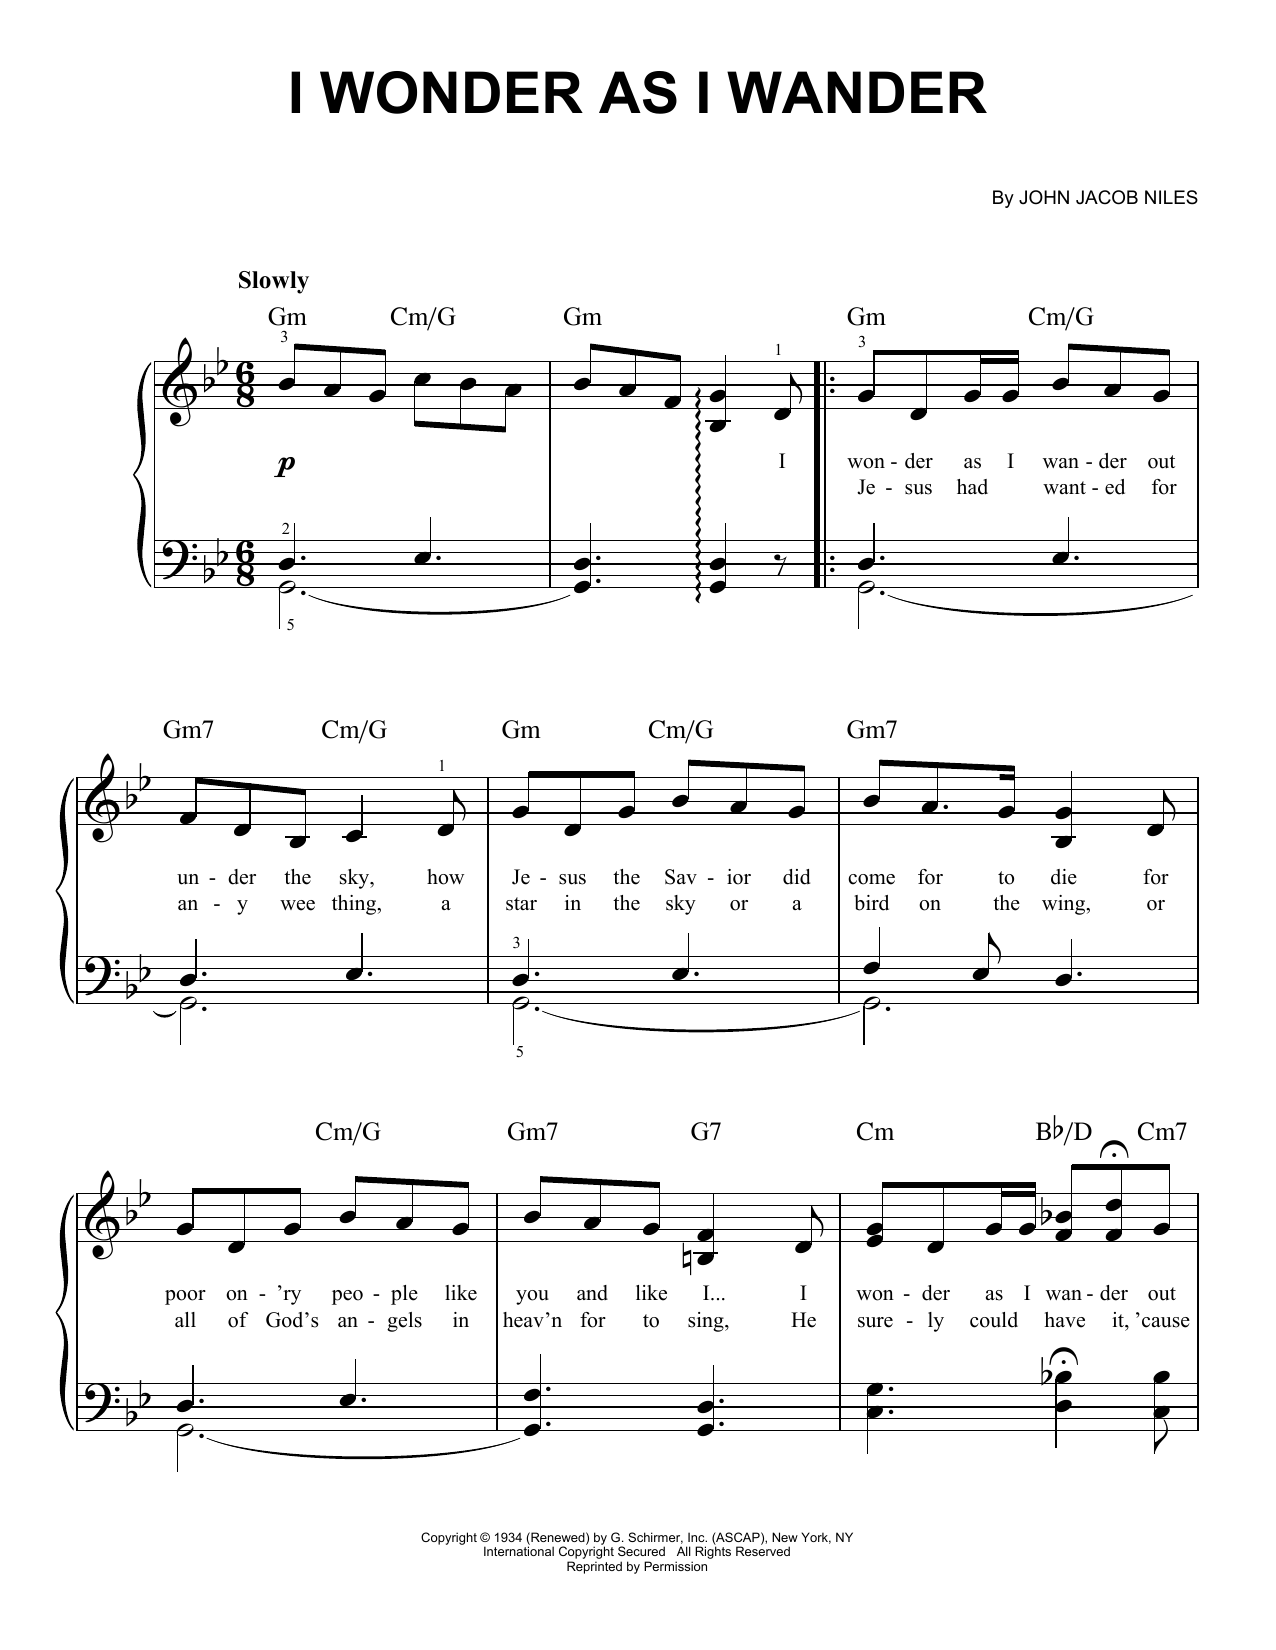 John Jacob Niles I Wonder As I Wander sheet music notes and chords. Download Printable PDF.